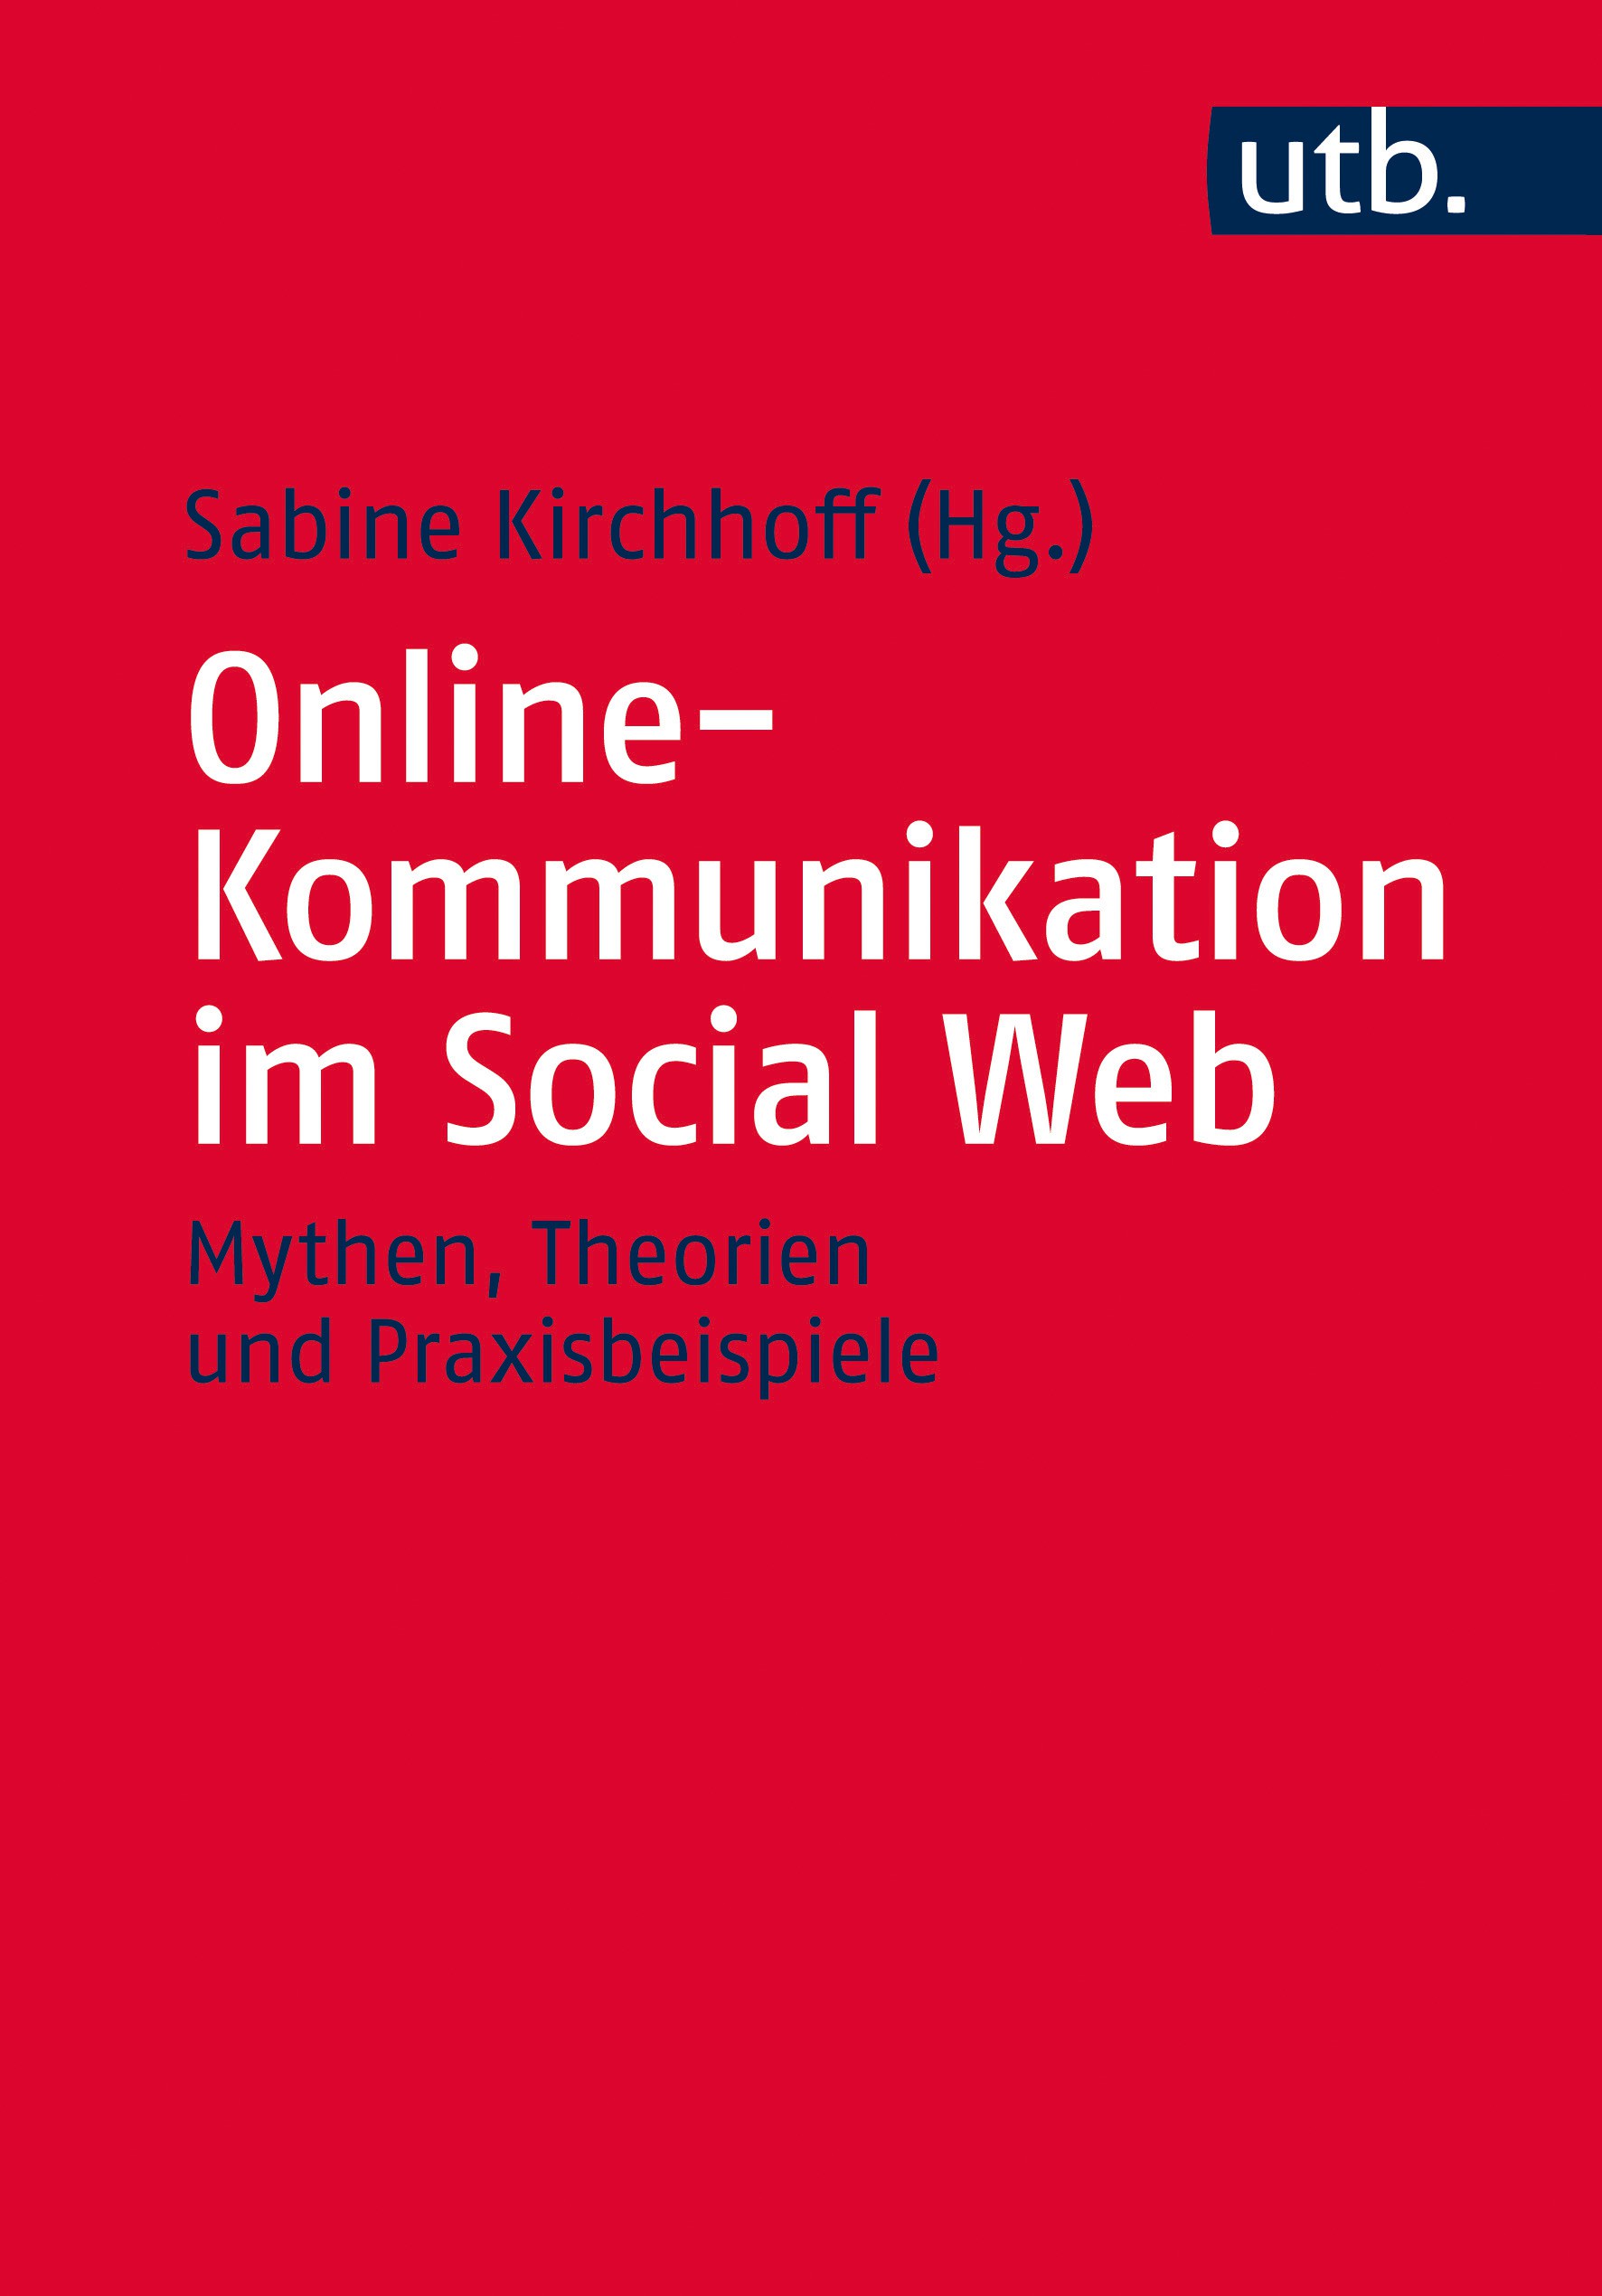 Online-Kommunikation im Social Web